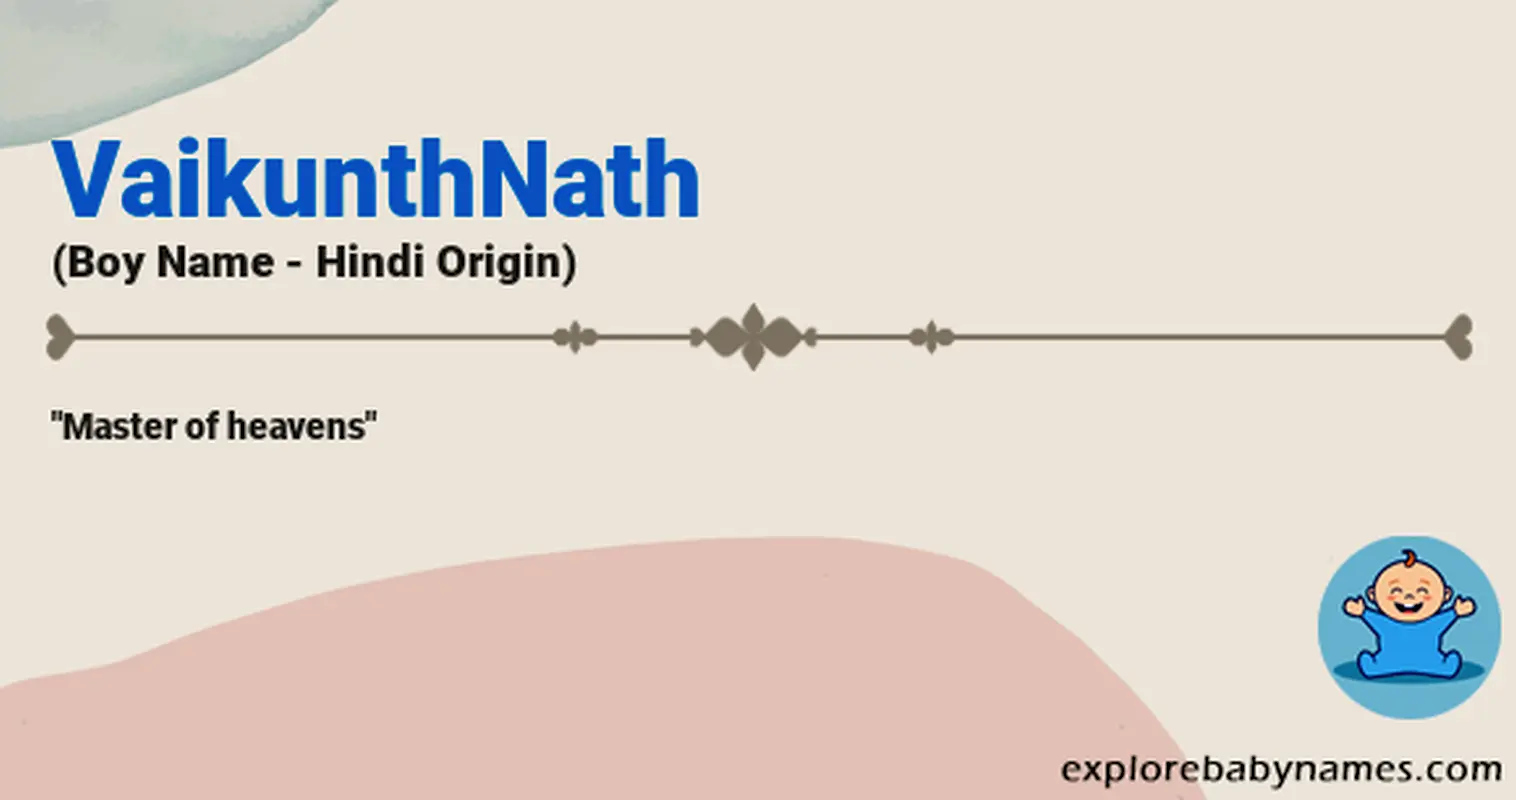 Meaning of VaikunthNath